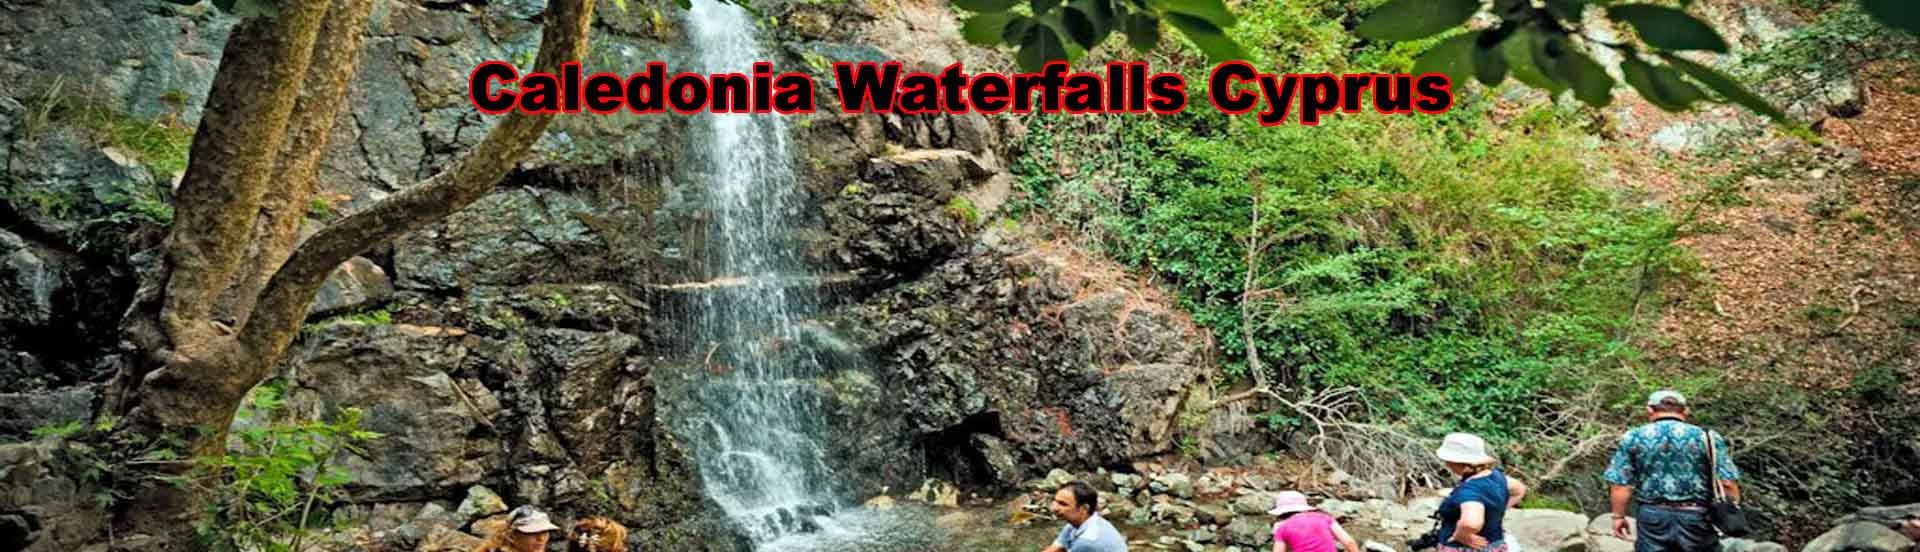 Caledonia Waterfalls Natural Hiking Trail